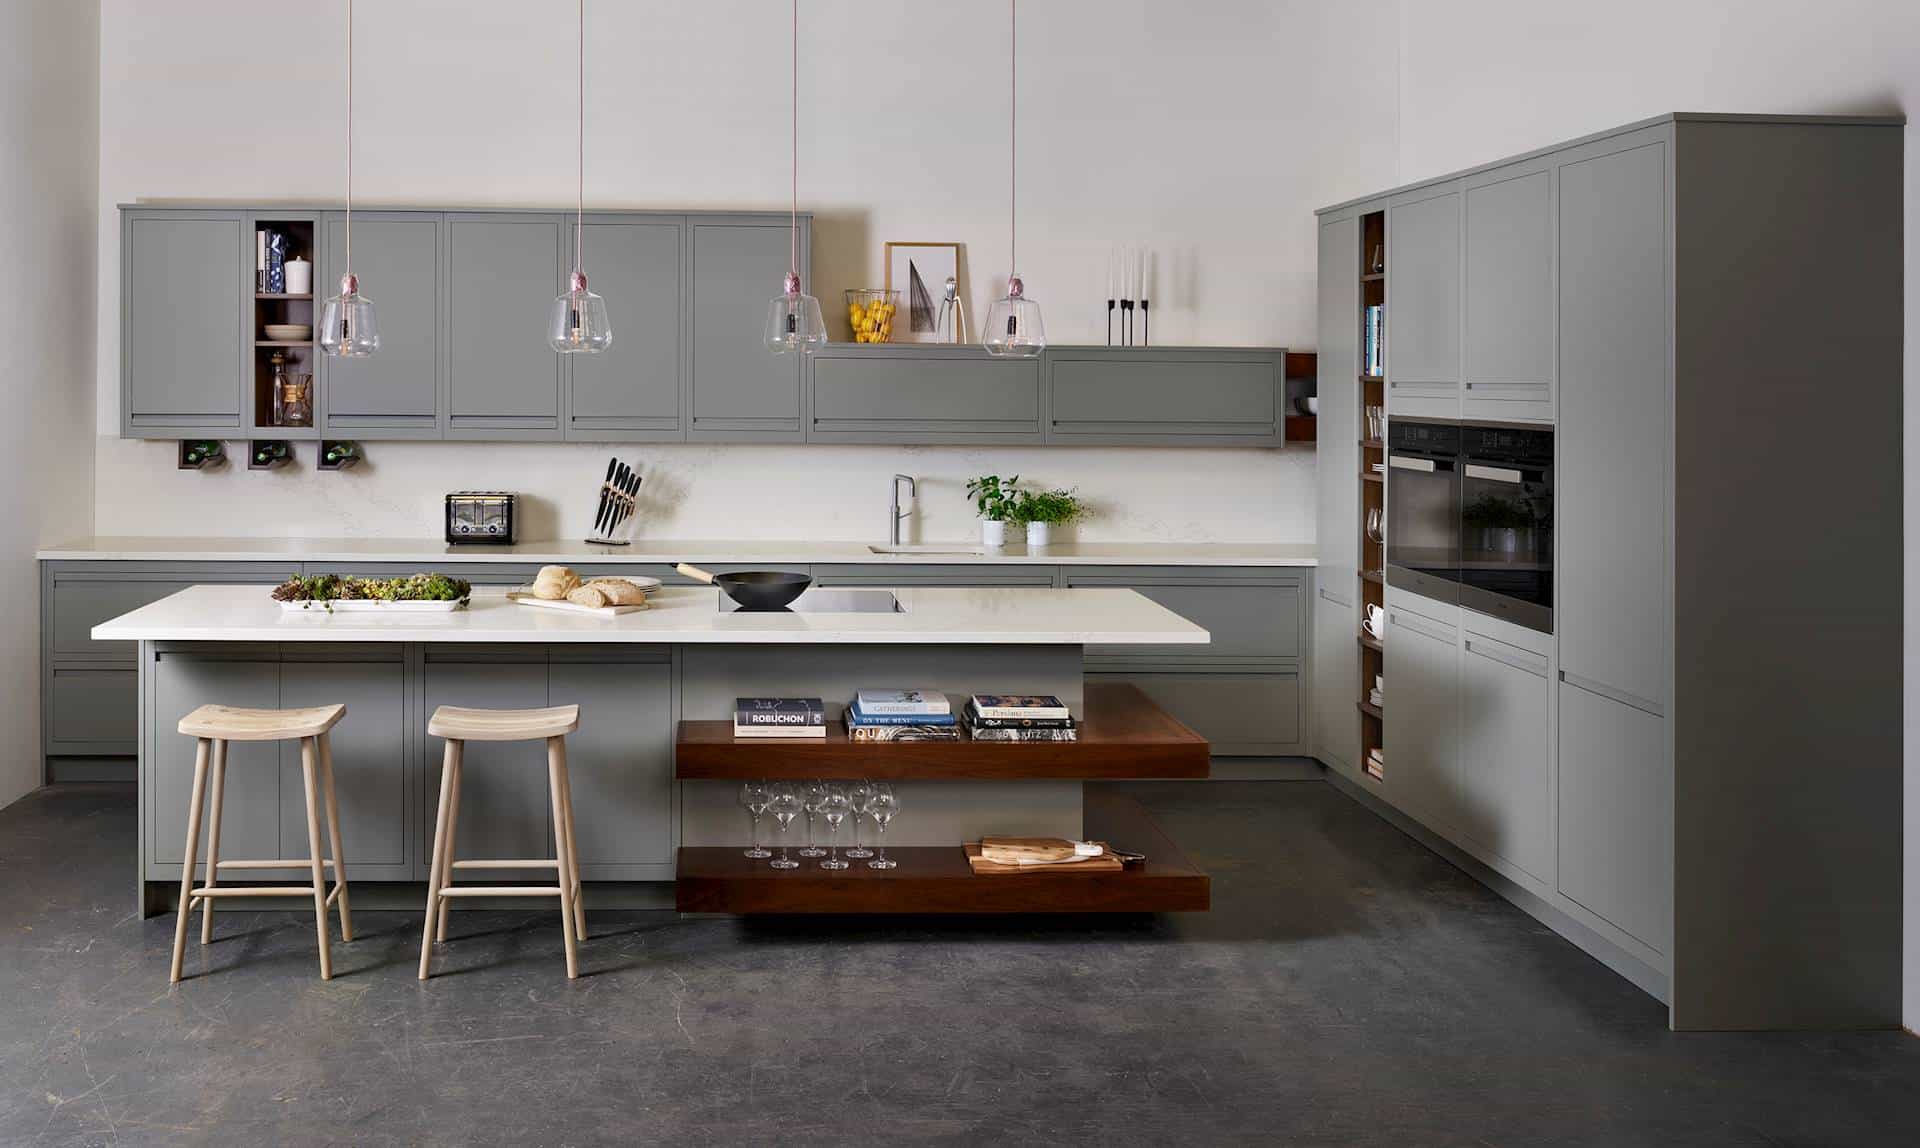 Modern kitchen design with sleek handleless grey cabinets